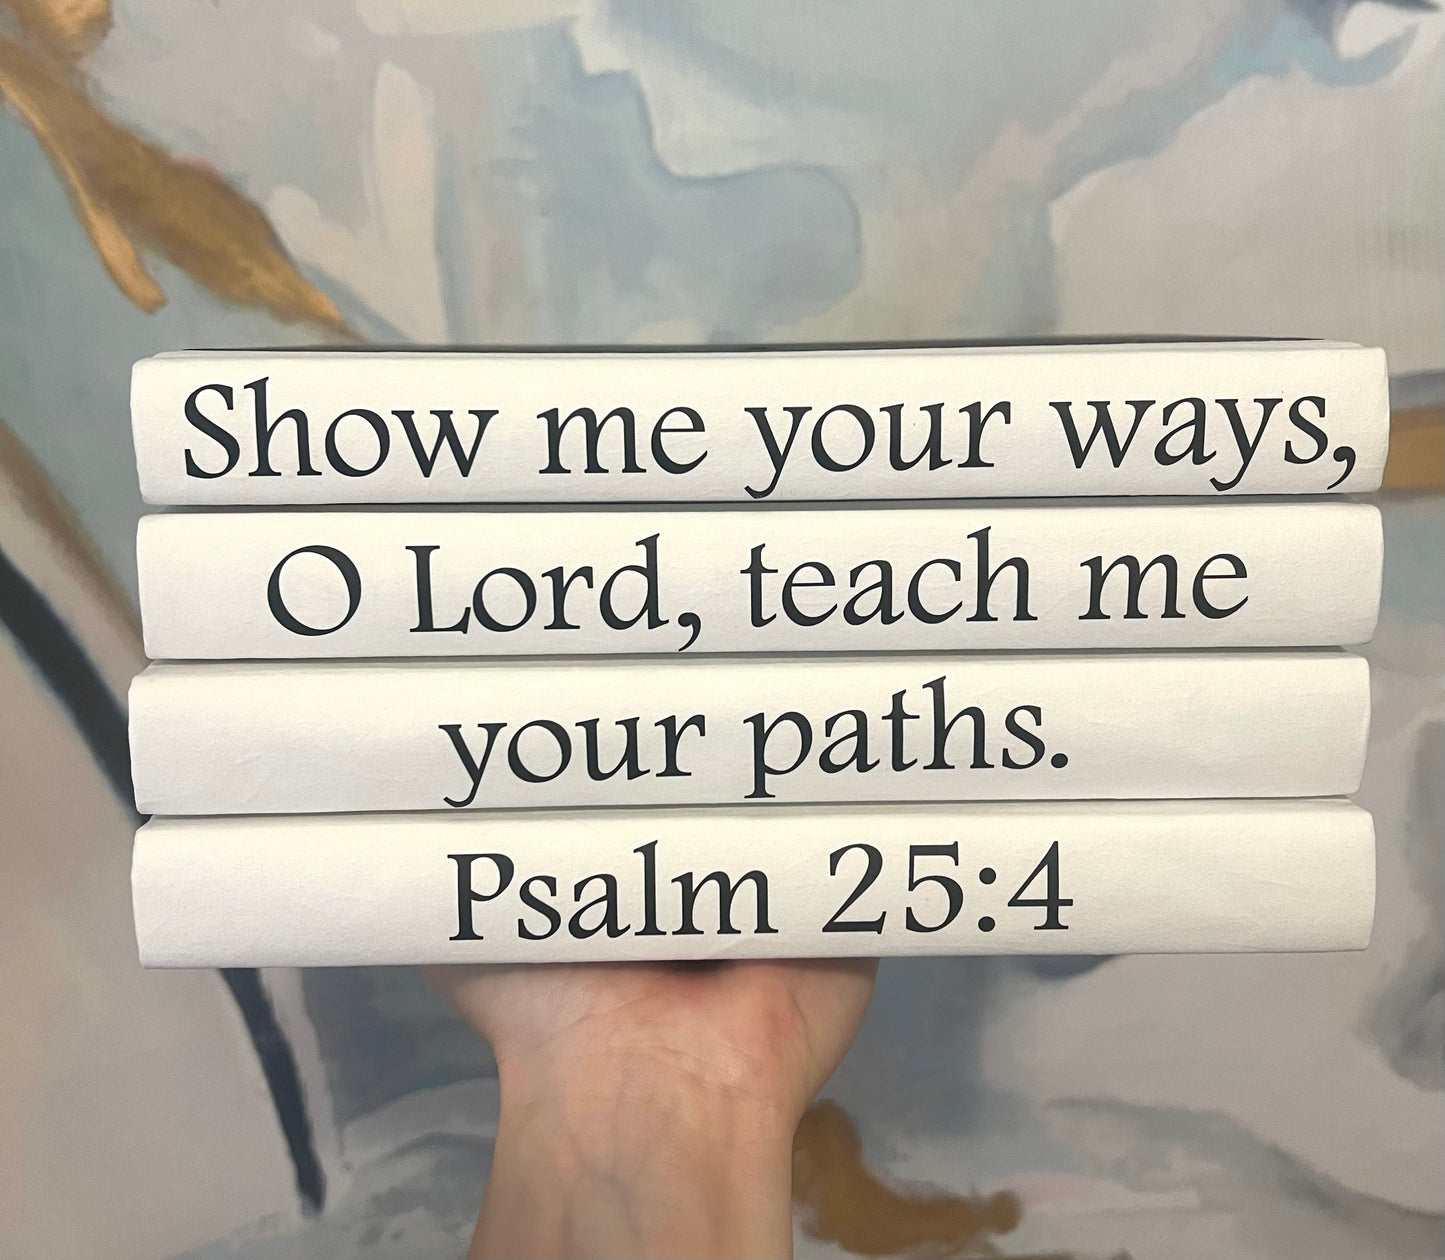 “Psalm 25:4”